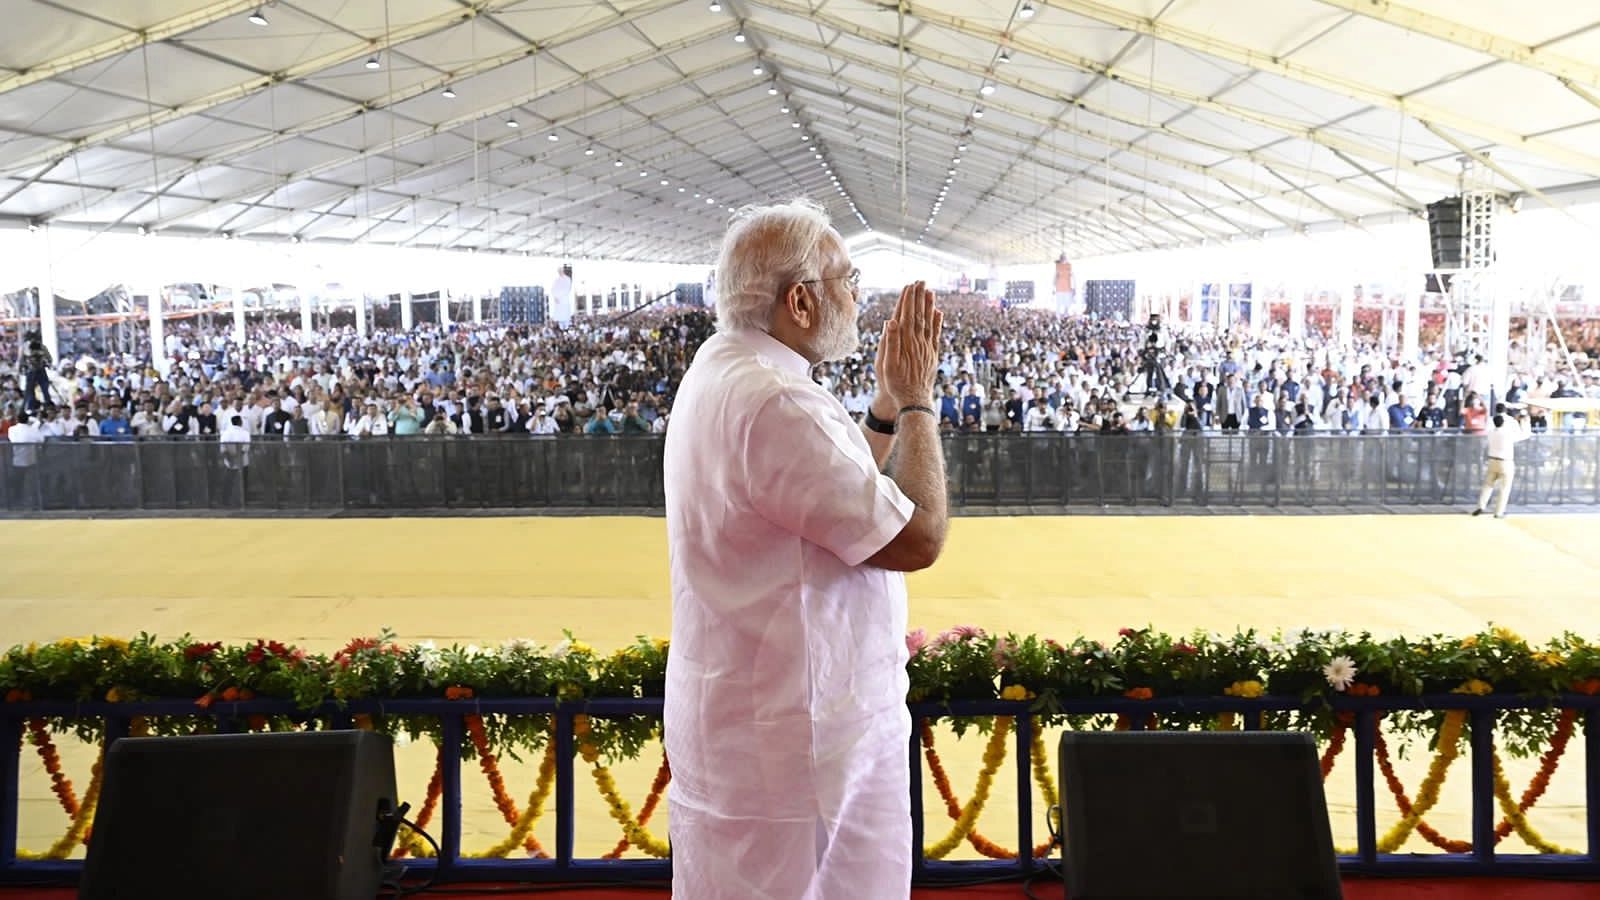 <div class="paragraphs"><p>Prime Minister Narendra Modi greets the crowd in Rajkot, Gujarat.</p></div>